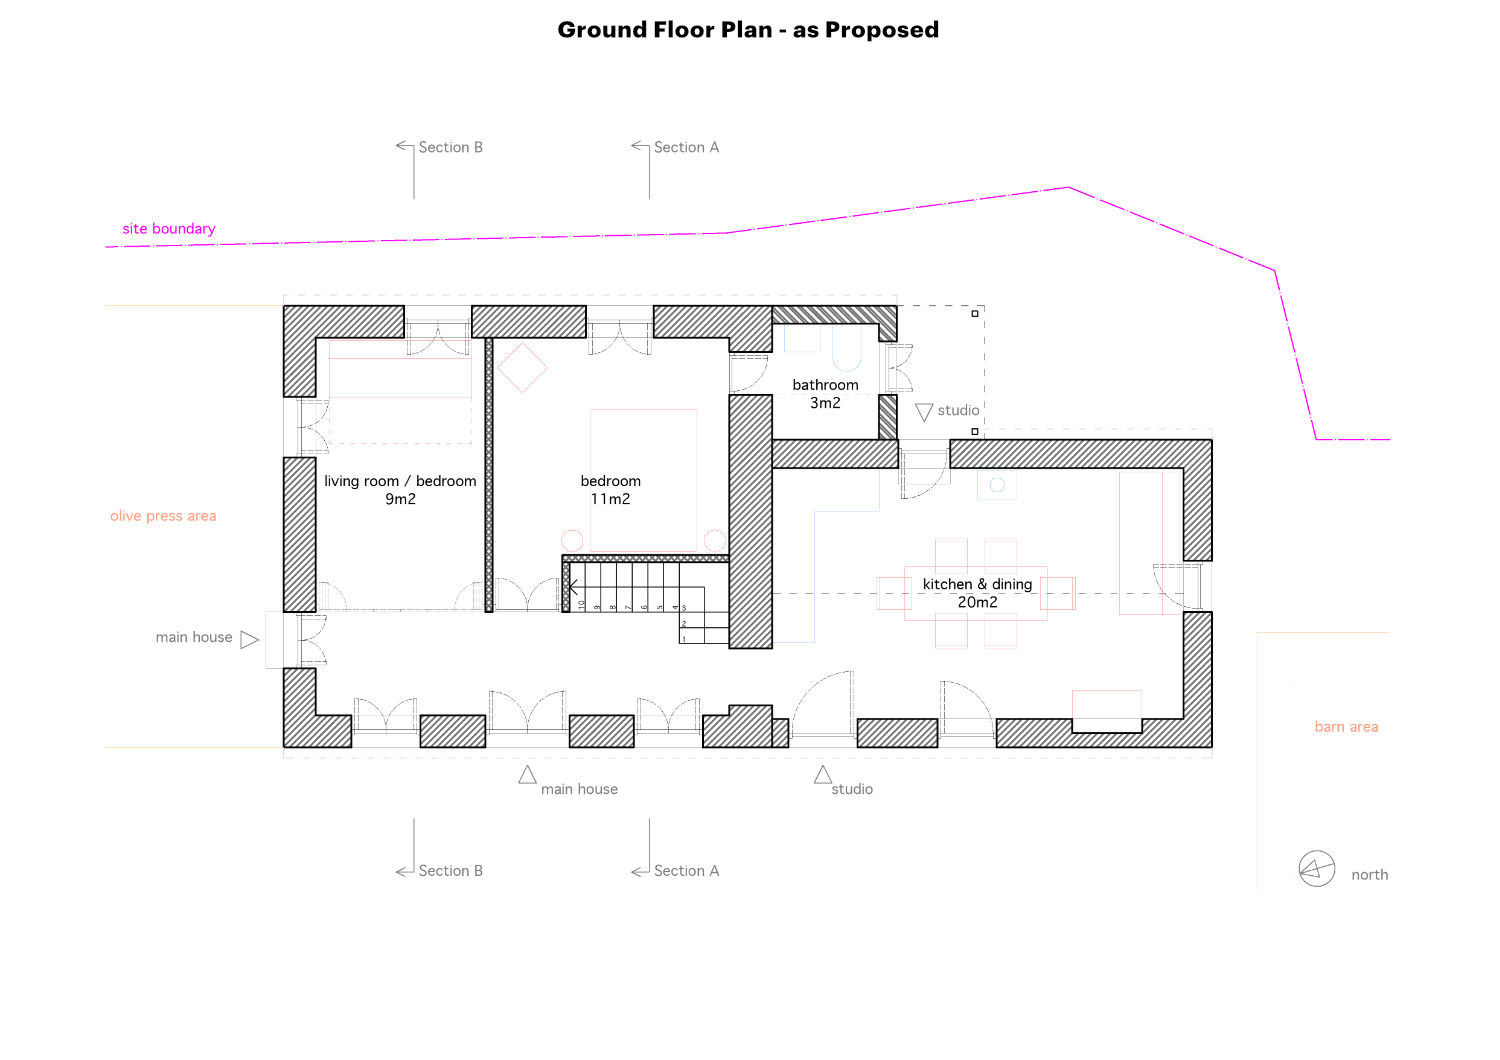 Rouvas Mathraki - Ground Floor Plan